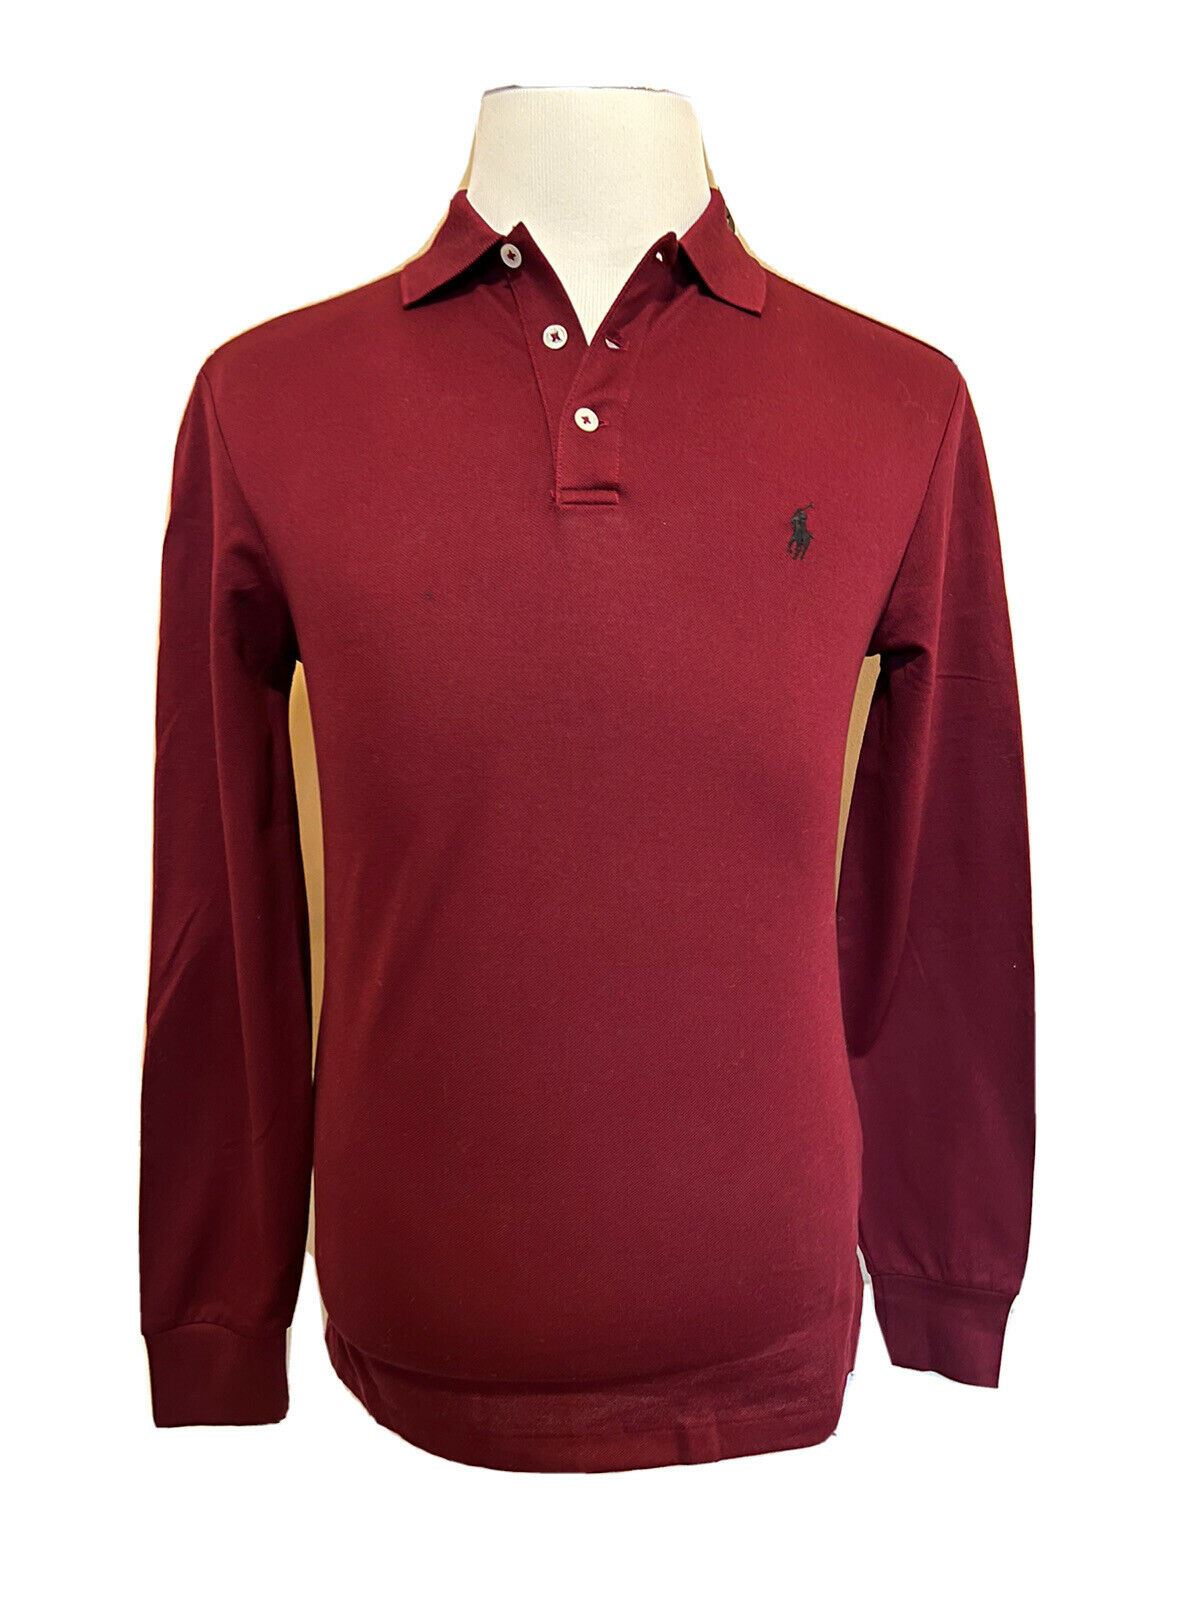 NWT $125 Polo Ralph Lauren Slim Fit Long Sleeve Polo Shirt Burgundy Small